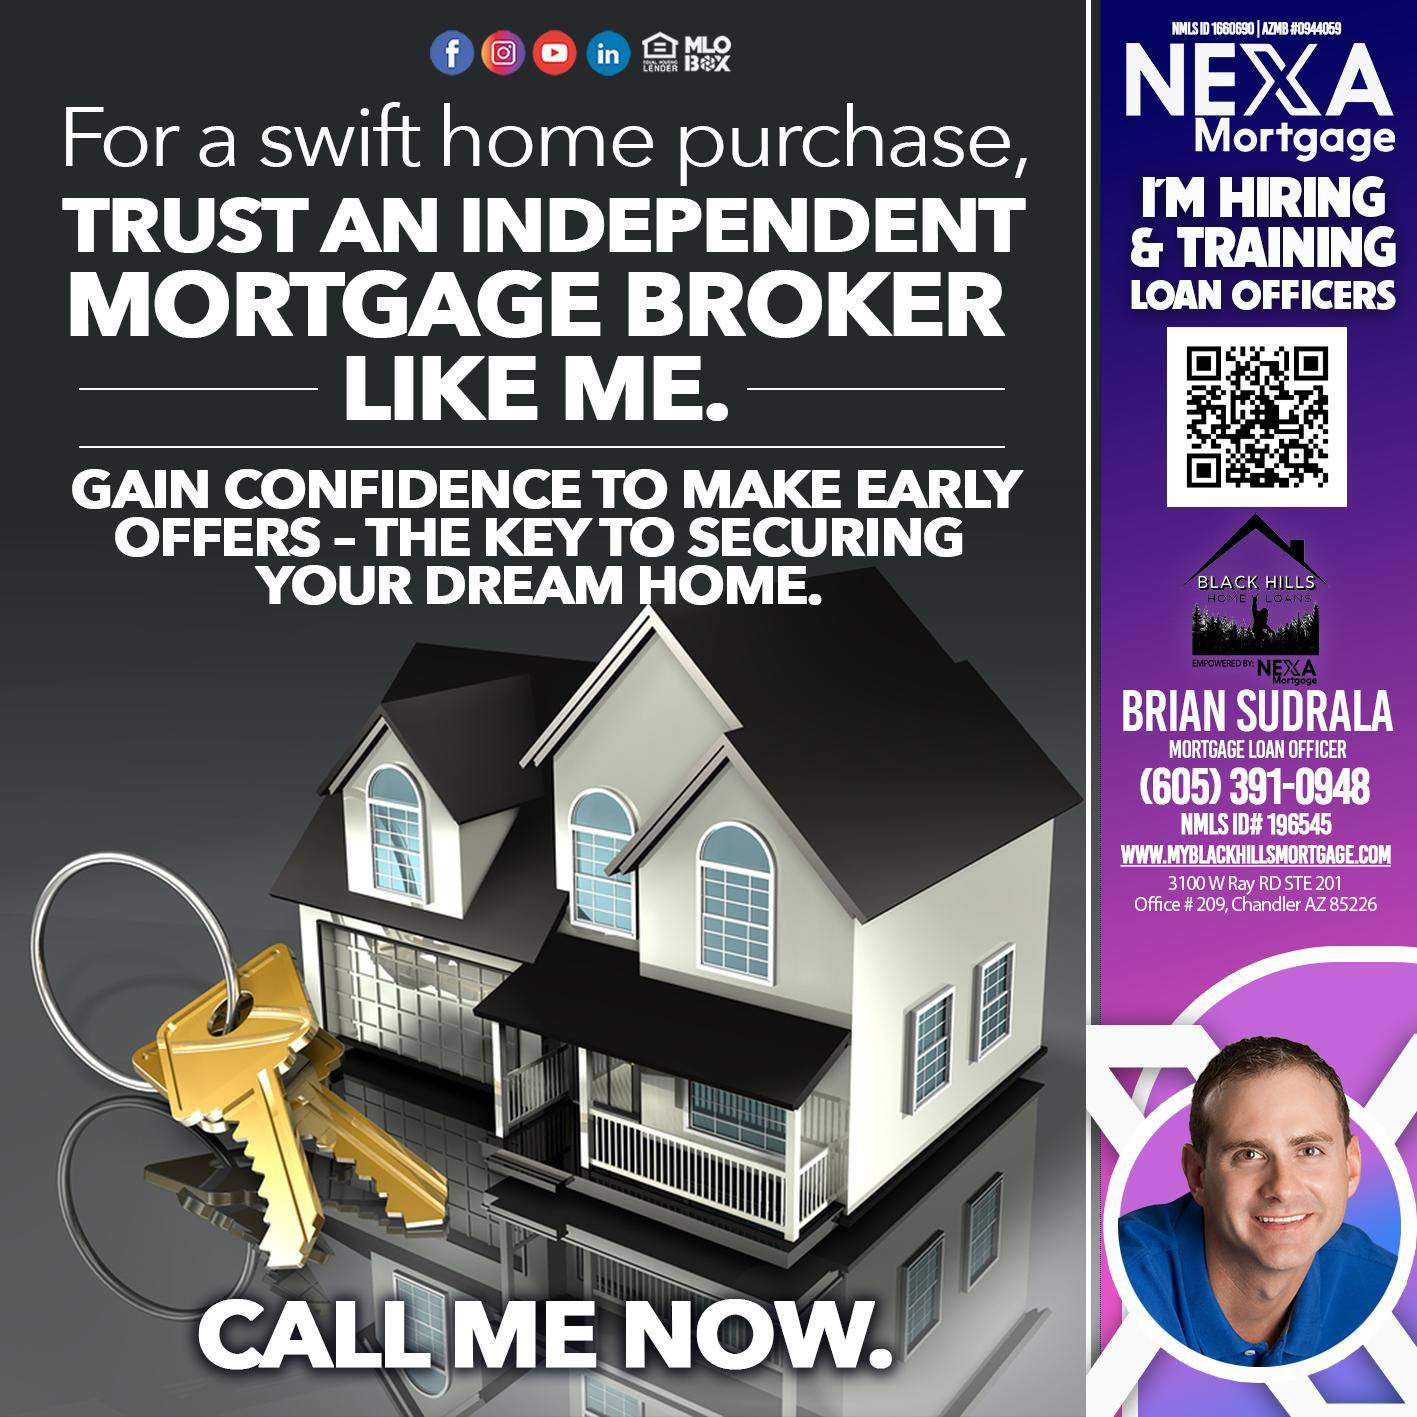 TRUST - Brian Sudrala -Mortgage Loan Officer